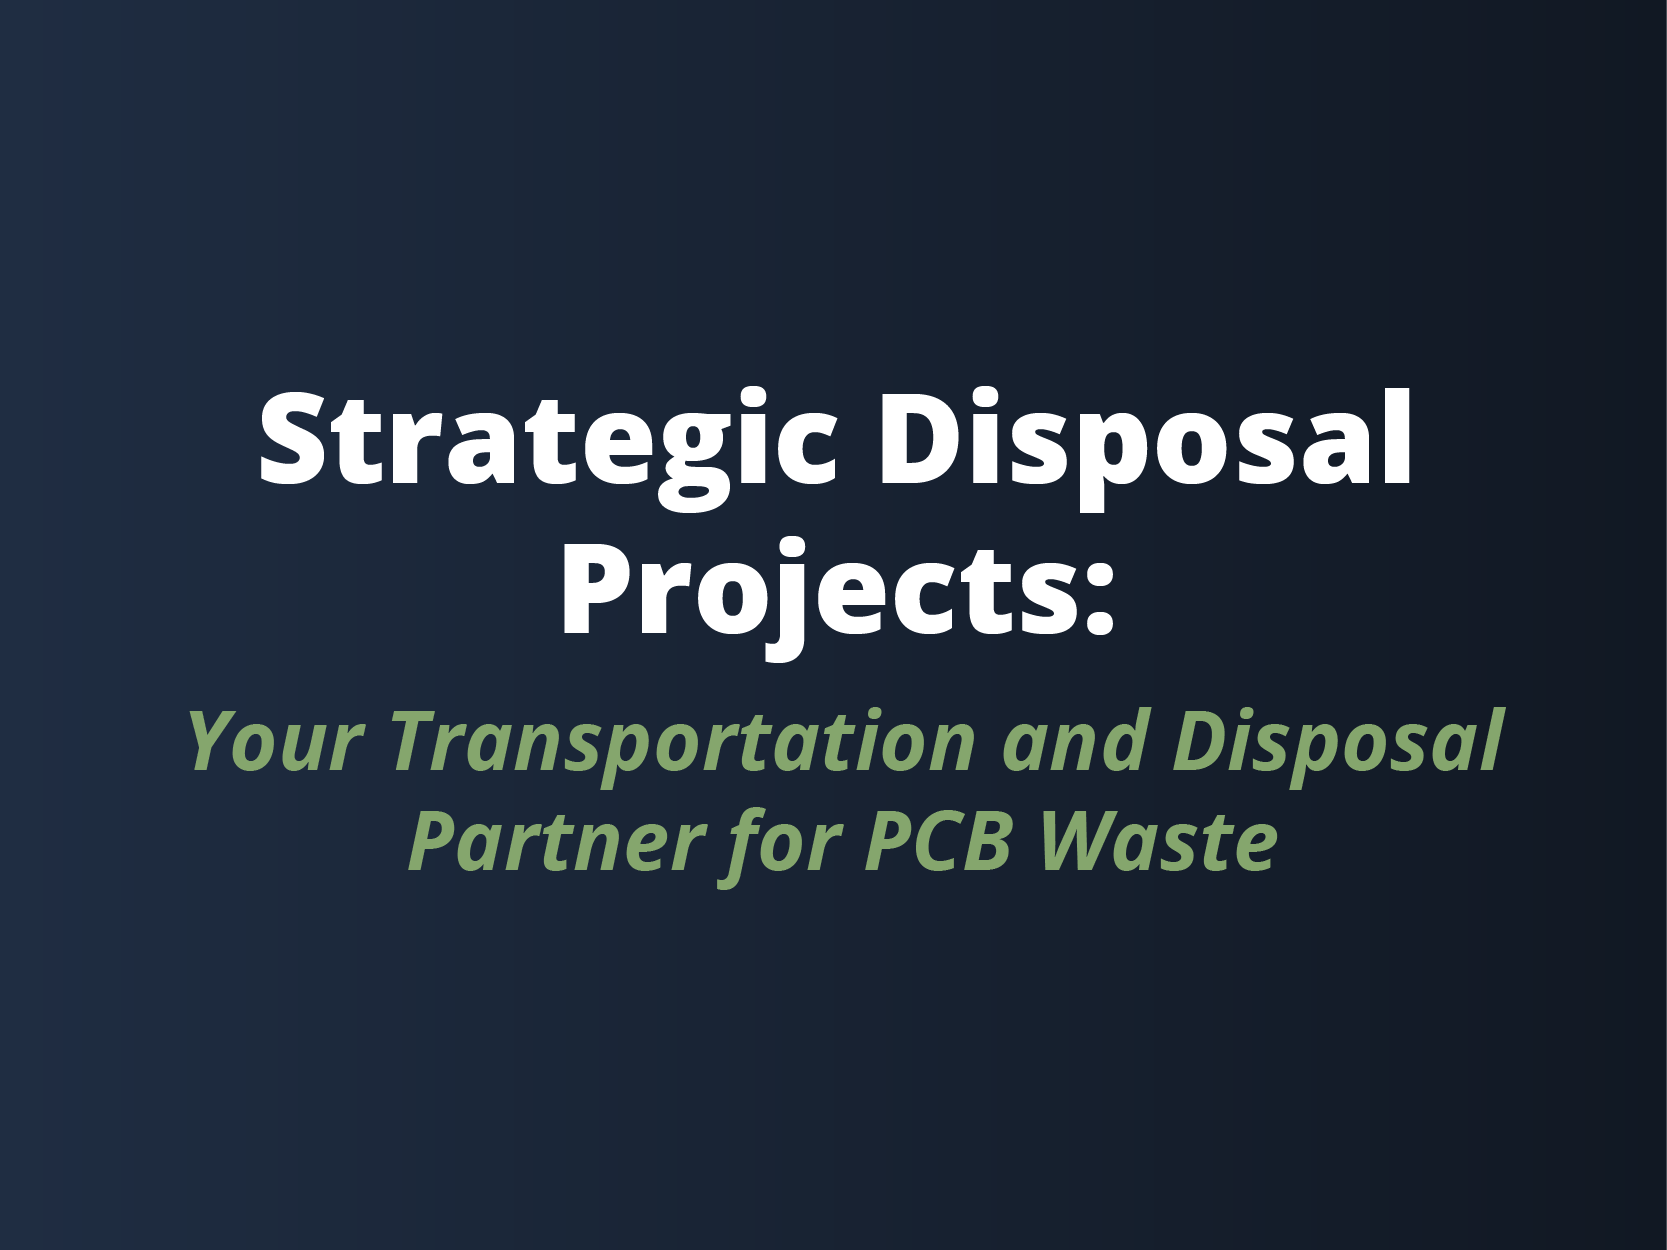 PCB remediation waste transportation and disposal partner